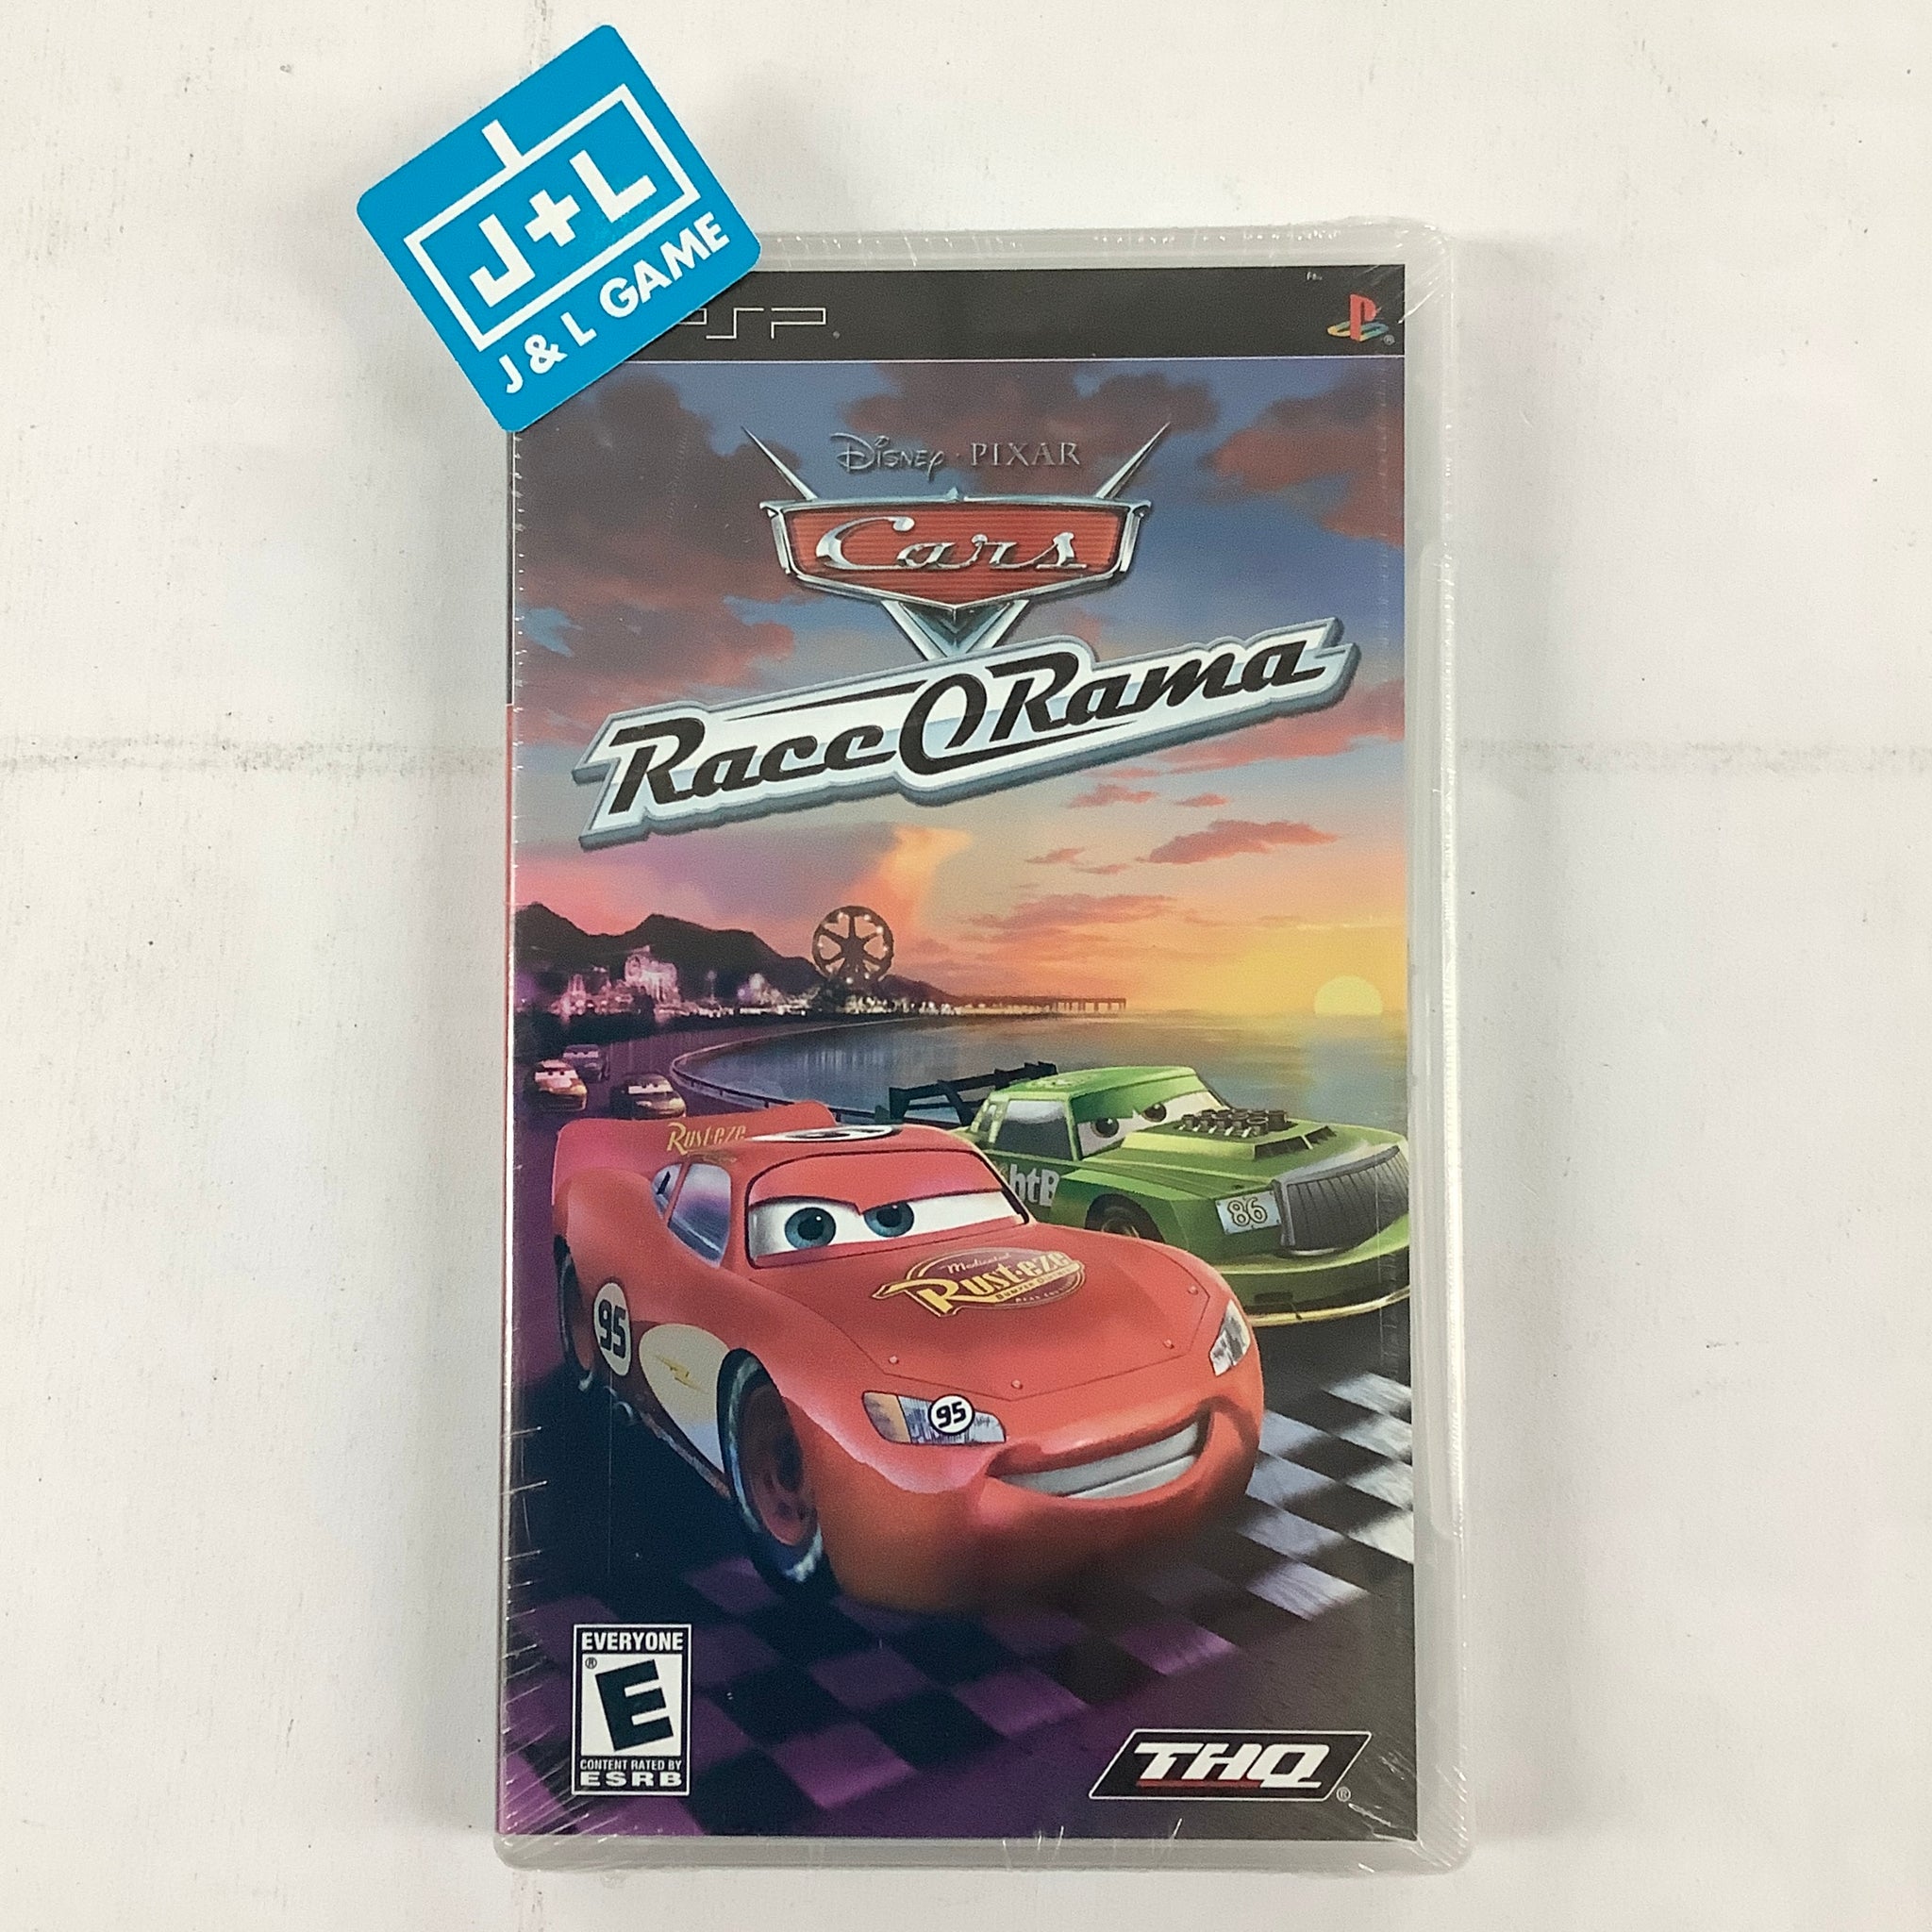 Cars Race-O-Rama Racing Video Games for sale